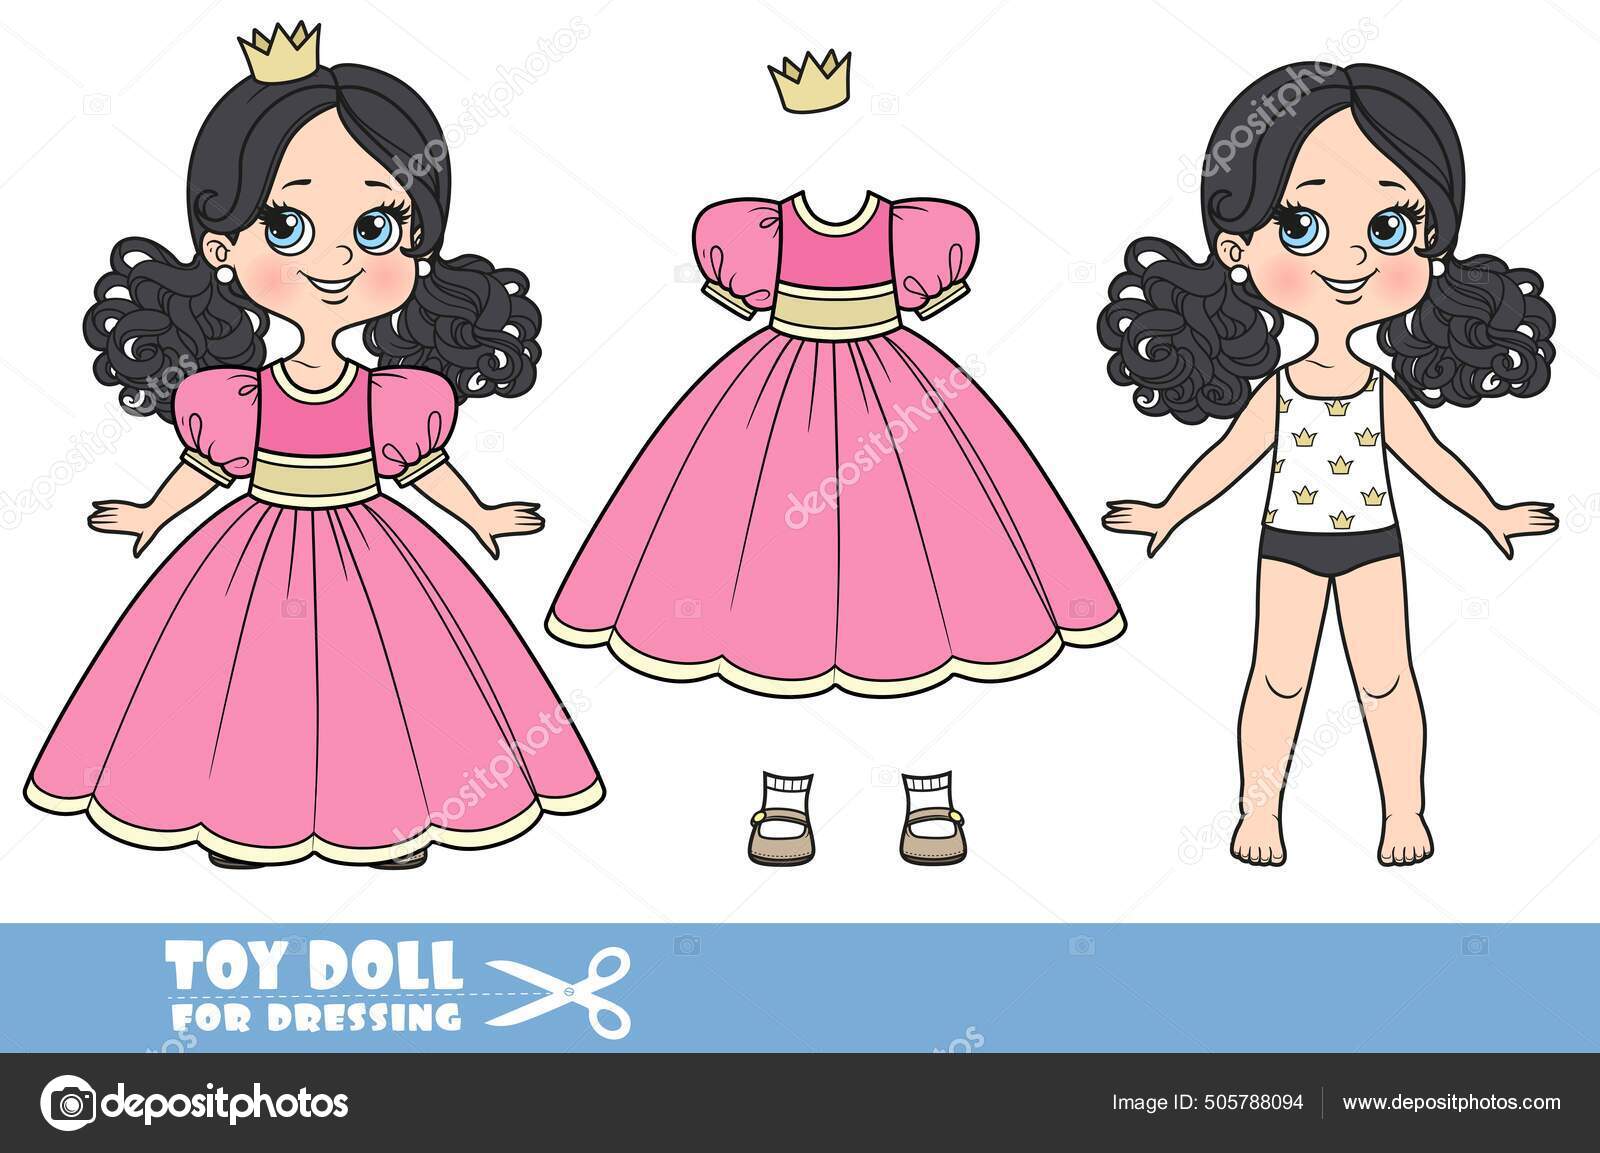 depositphotos 505788094 stock illustration cartoon girl black ponytails hairstyle